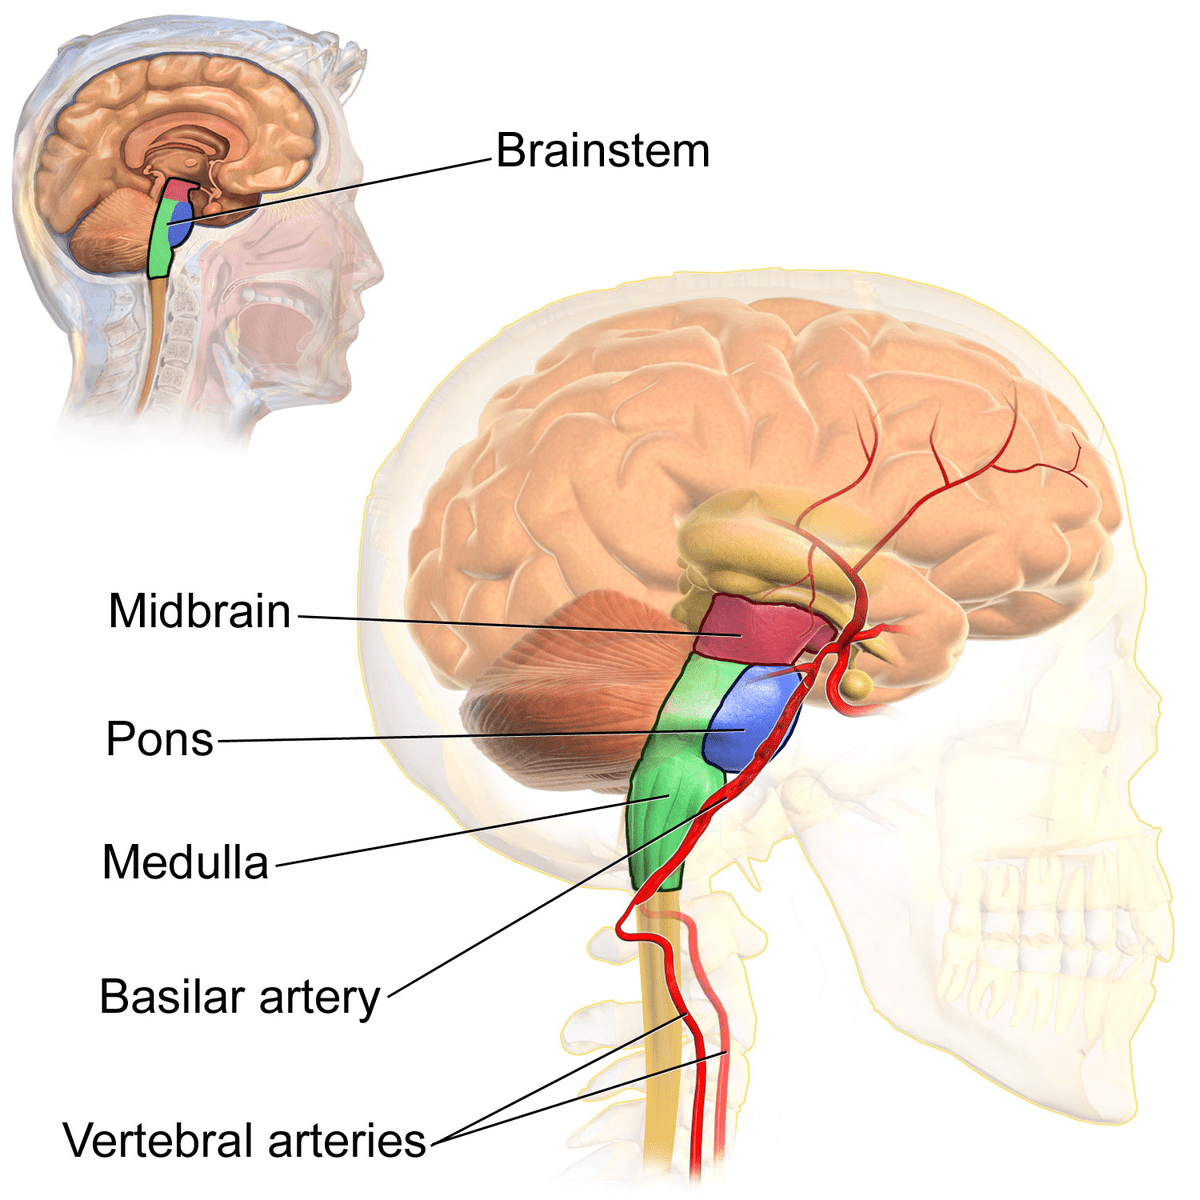 Hypoxic Ischemic Encephalopathy (HIE) and Brainstem Damage